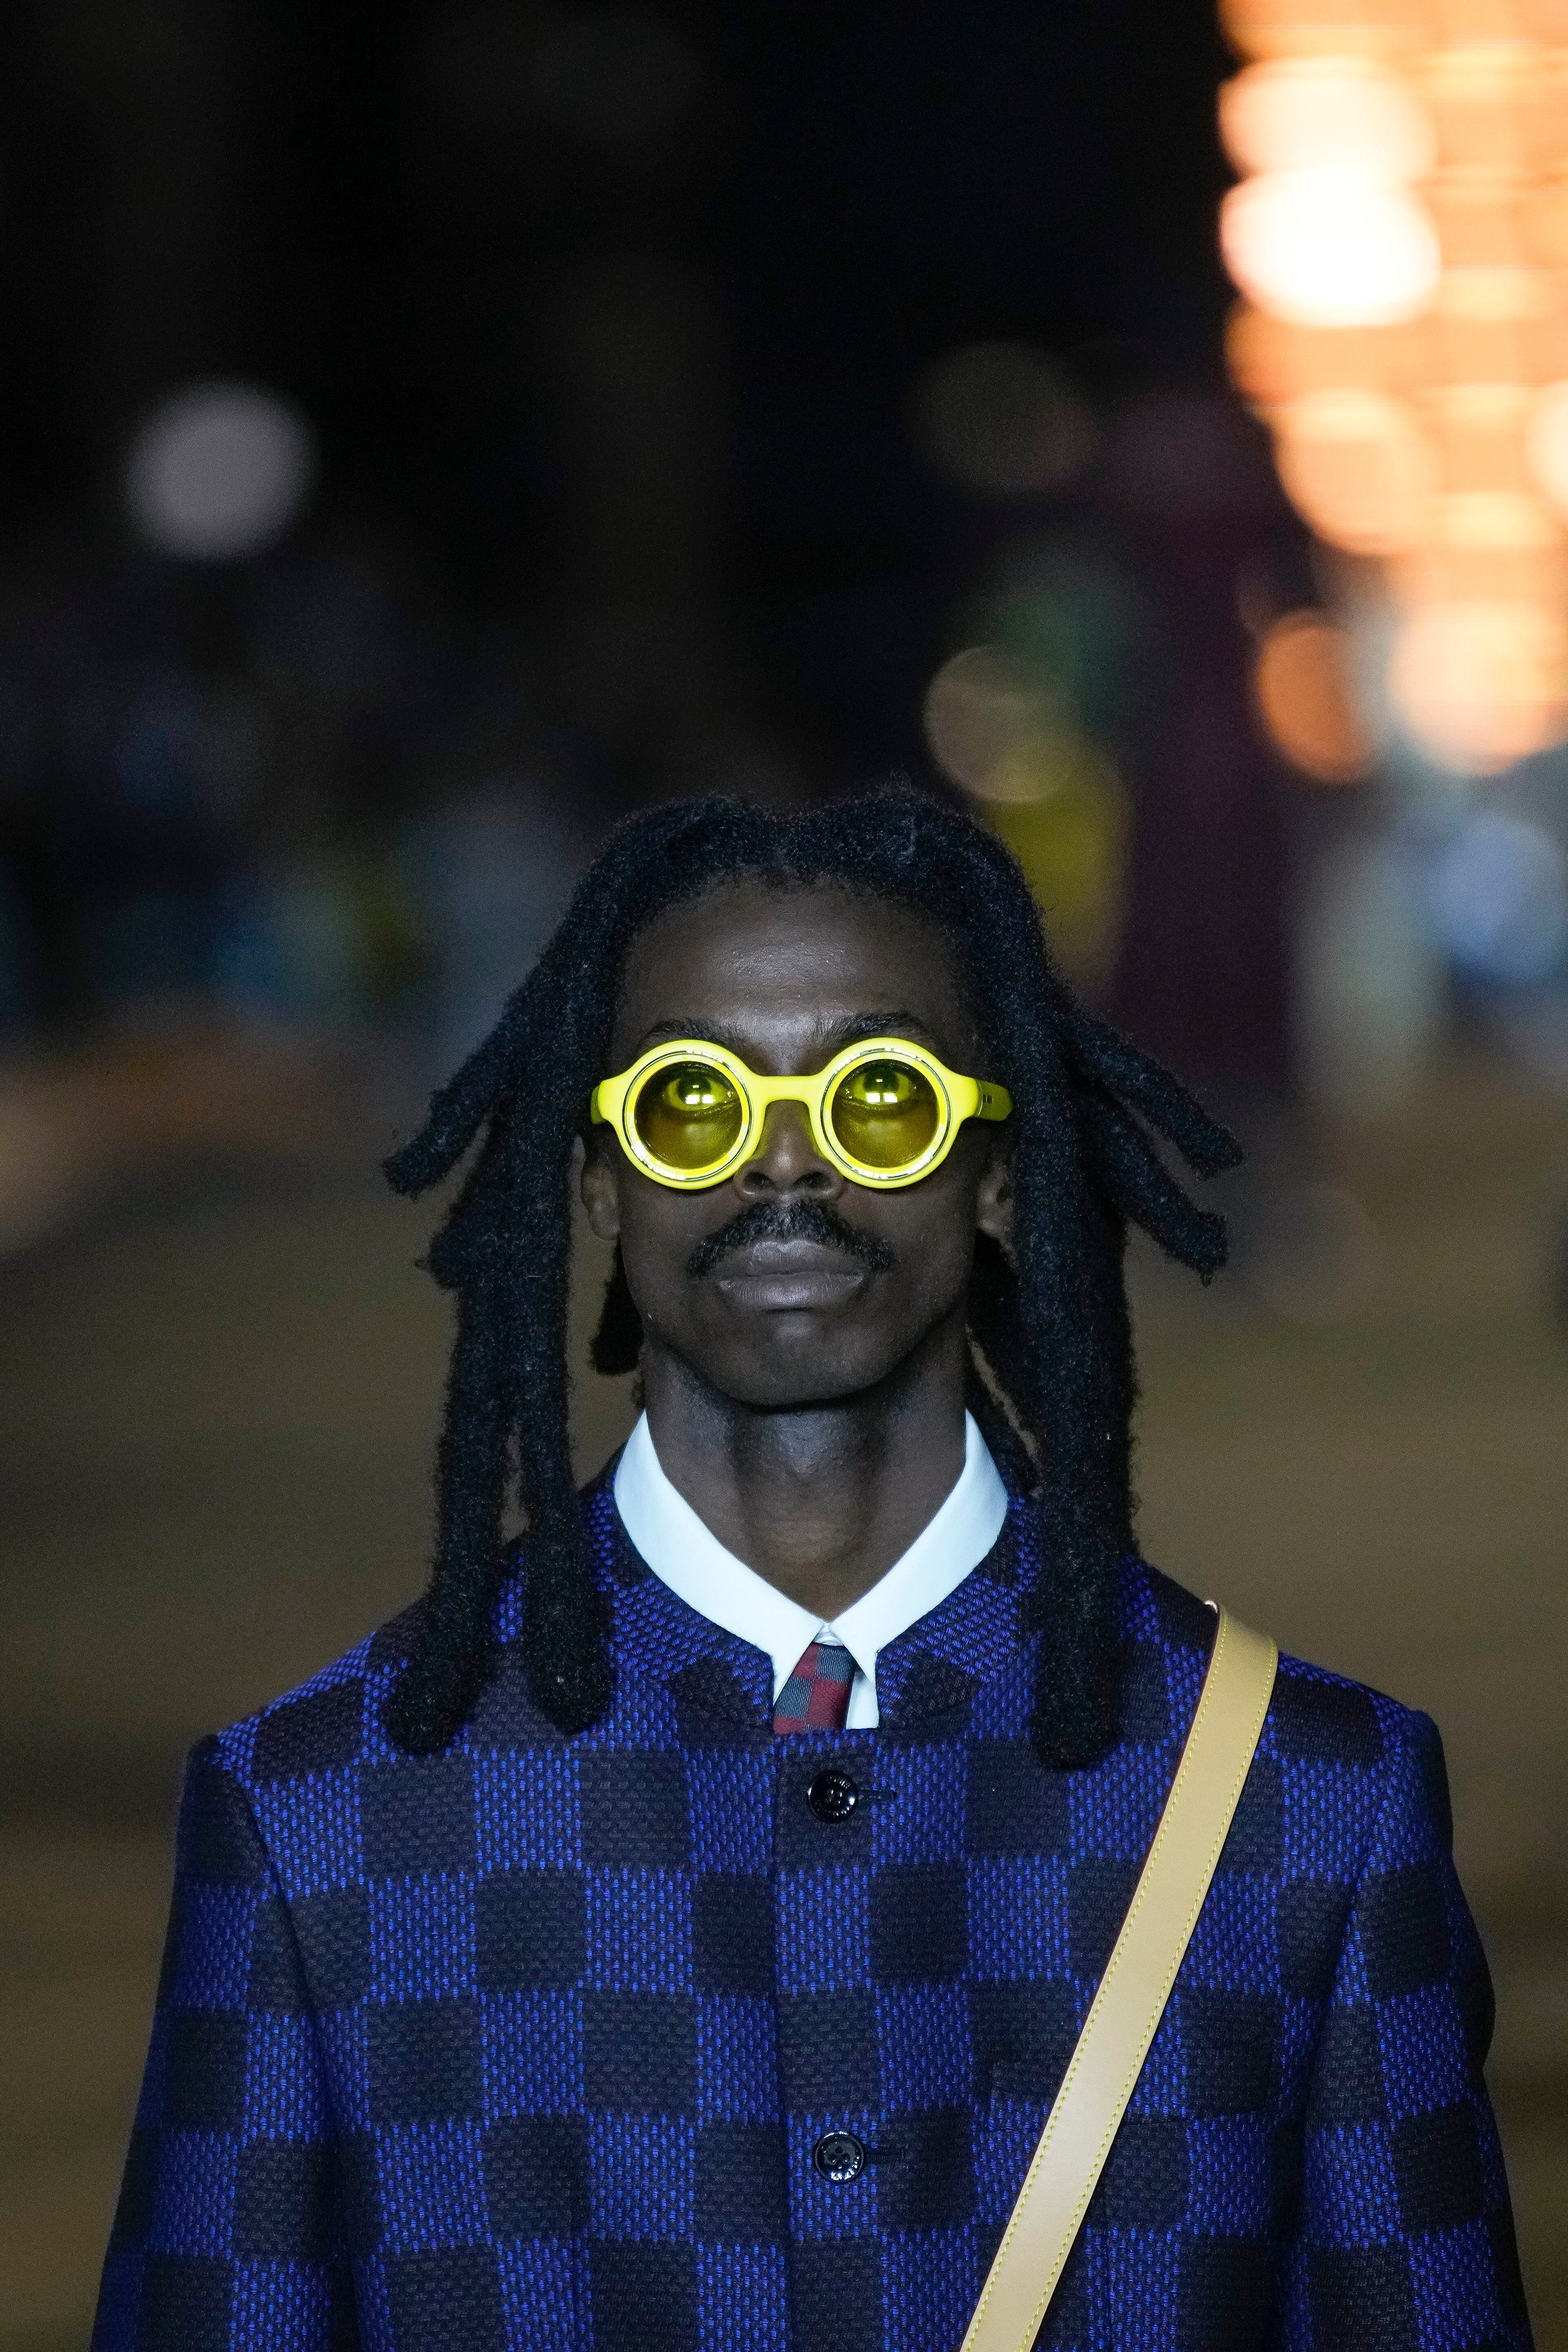 Louis Vuitton Men's Sunglasses for sale in Orlando, Florida